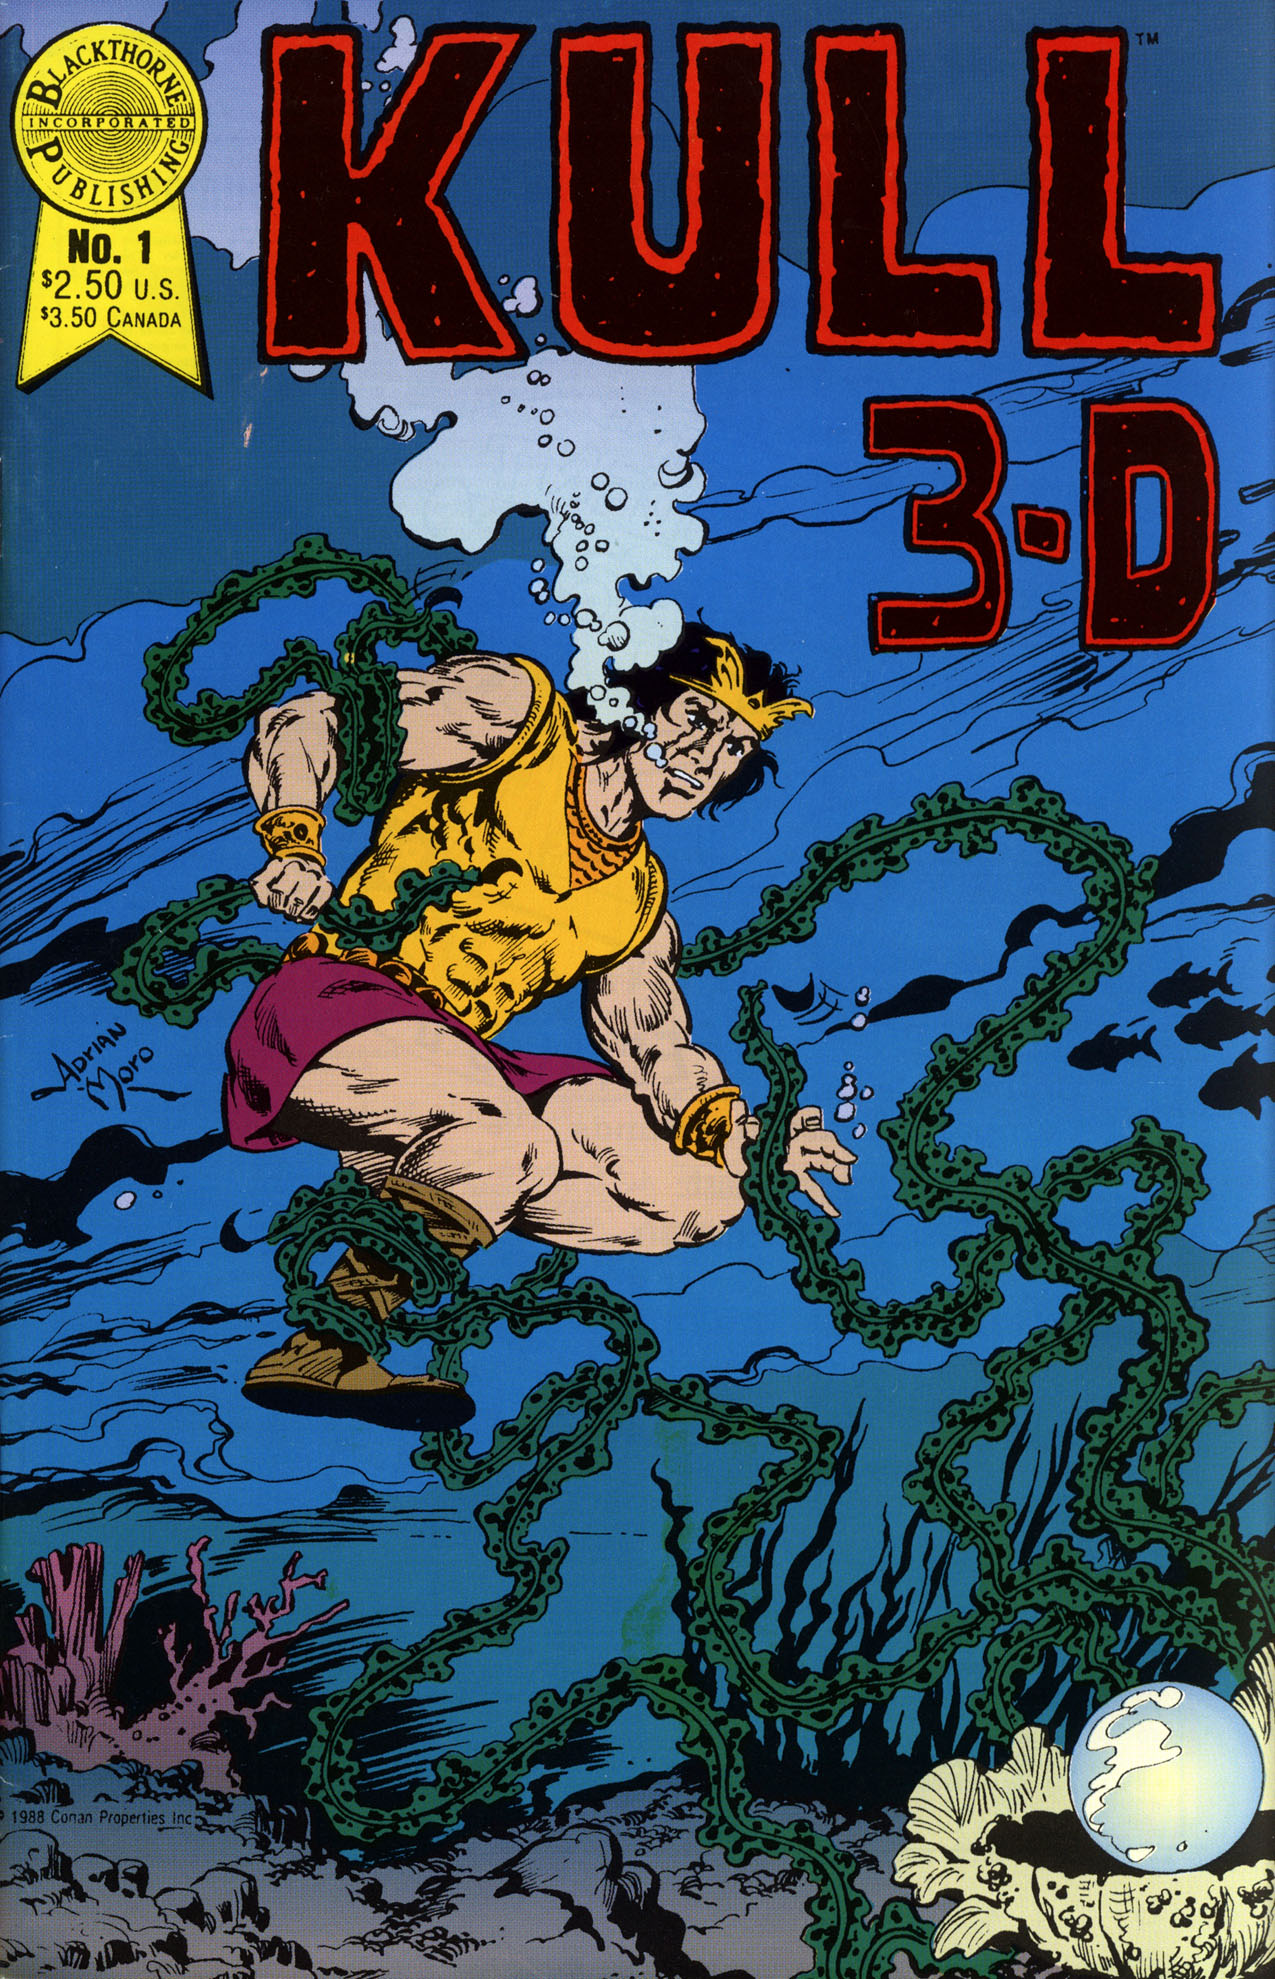 Read online Blackthorne 3-D Series comic -  Issue #51 - 1